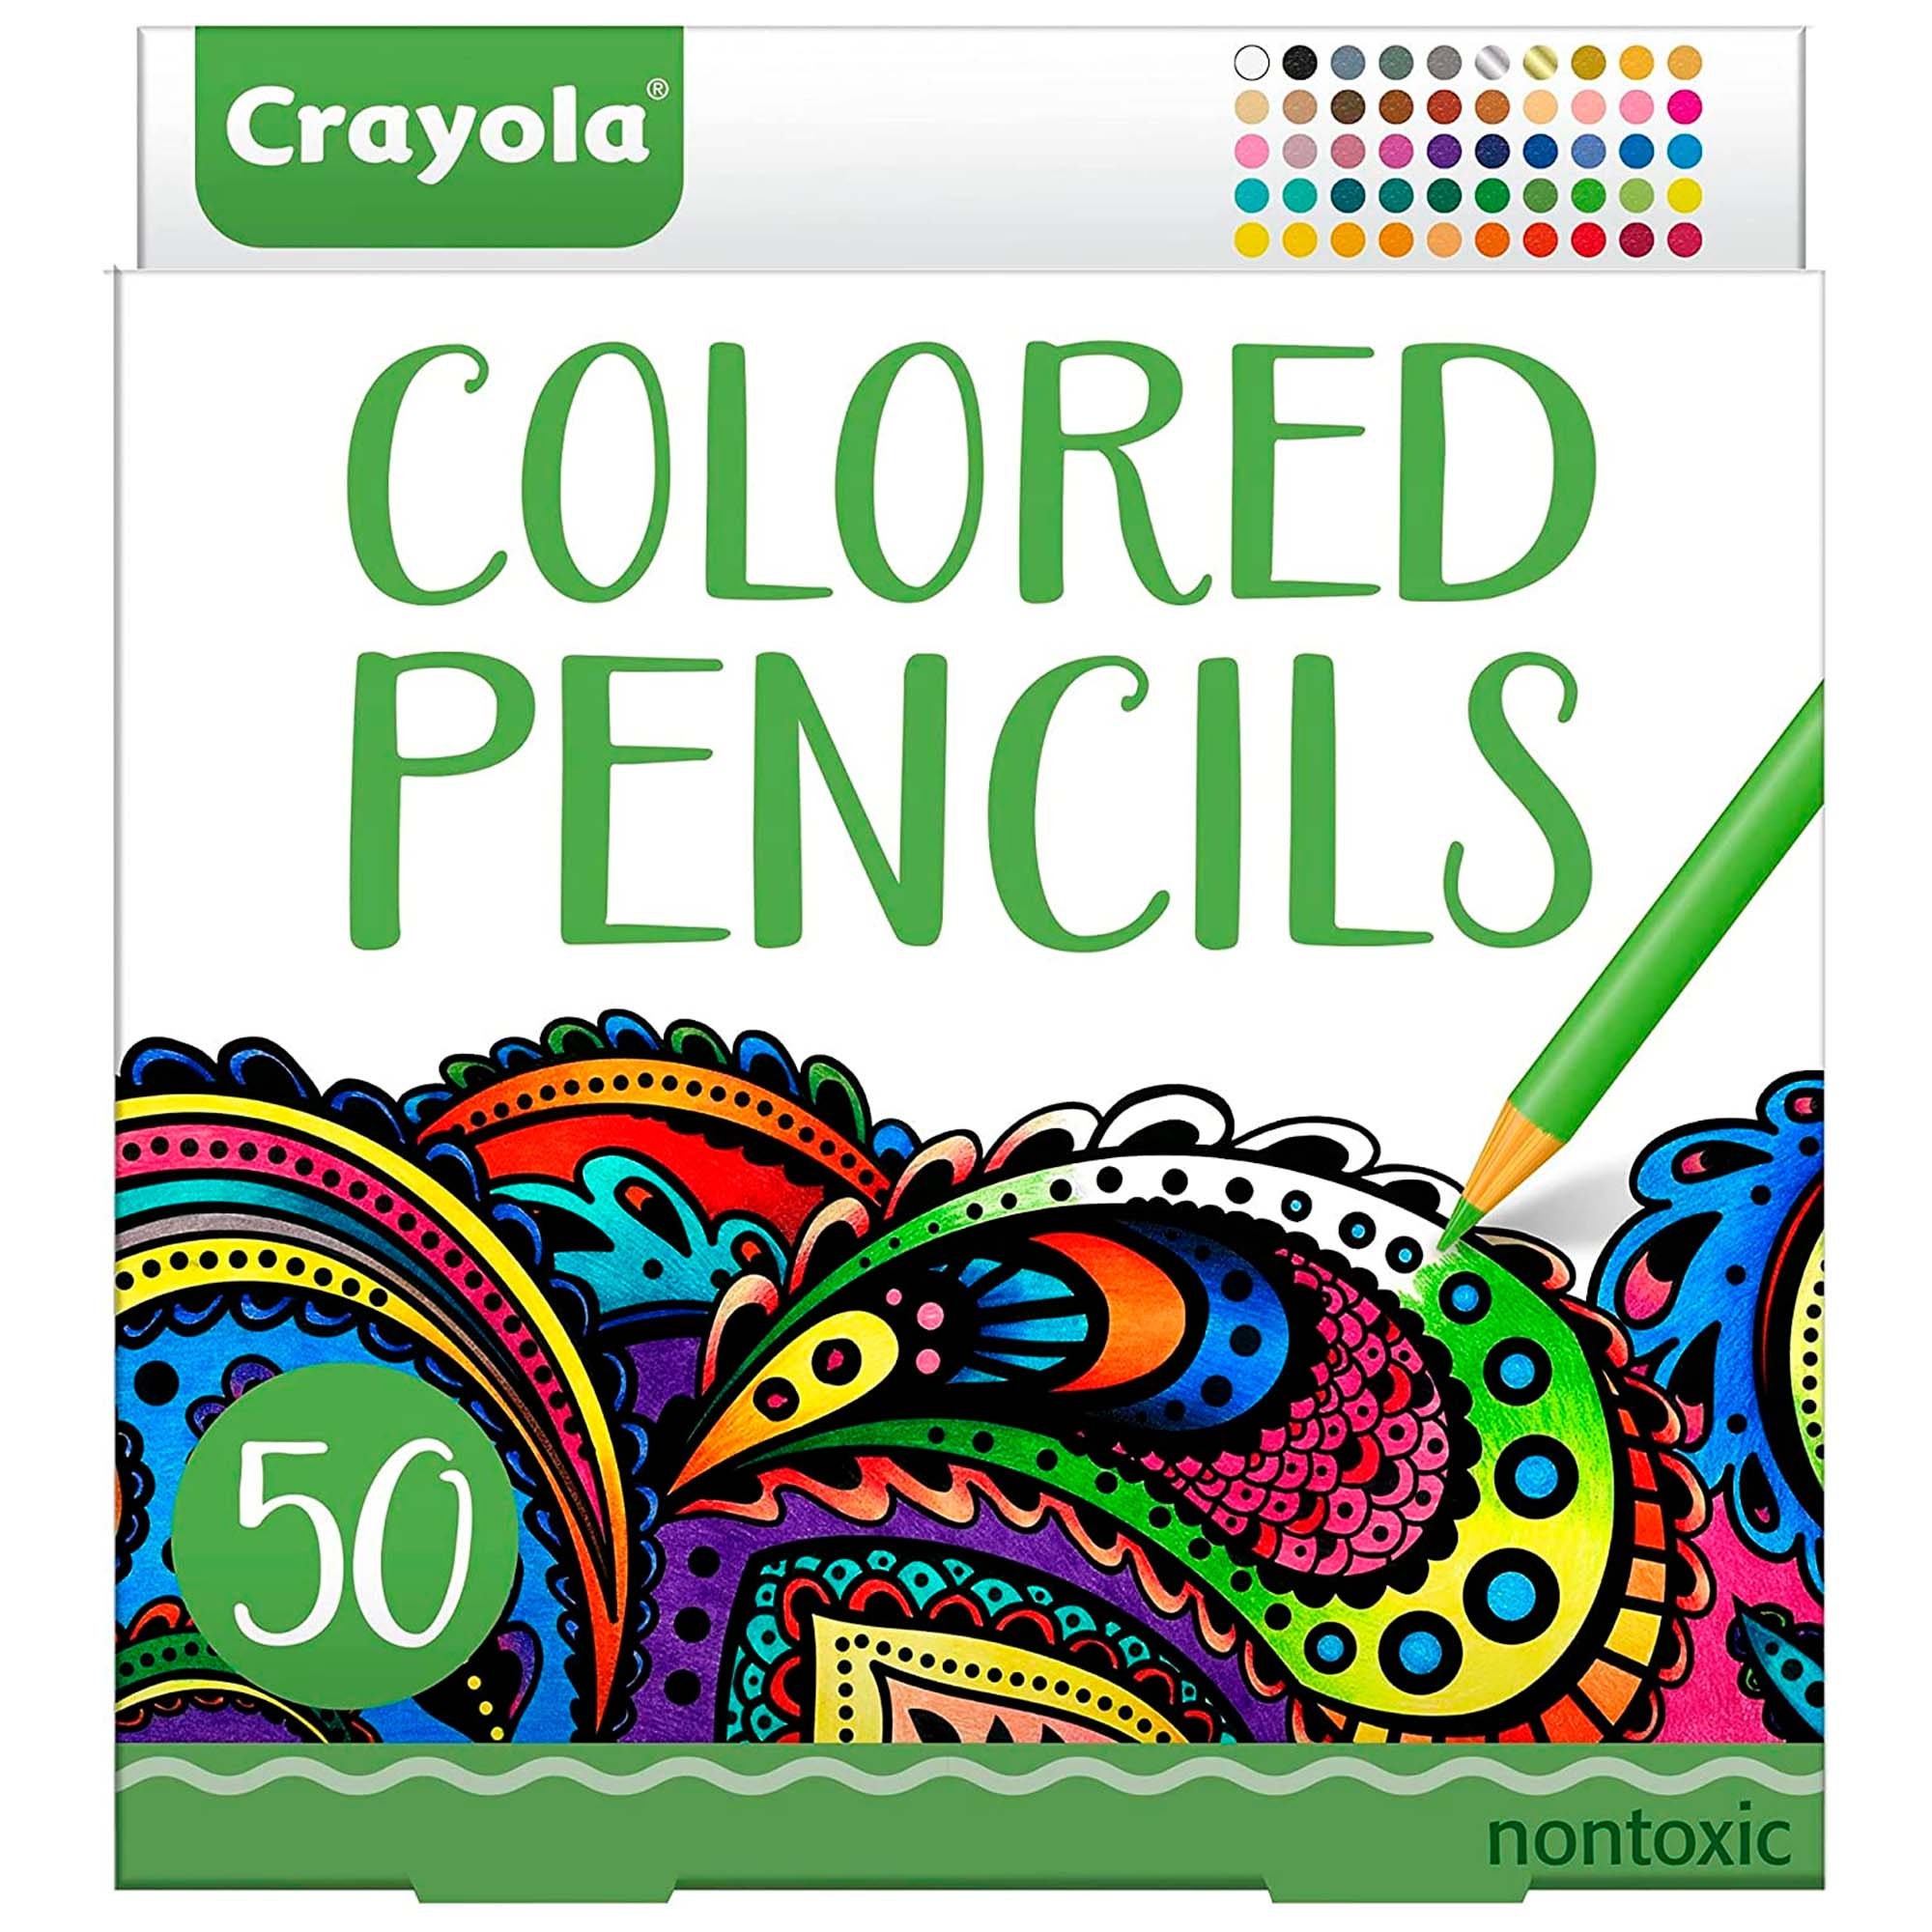 Kalour 50 Pastel Colored Pencils With Box 